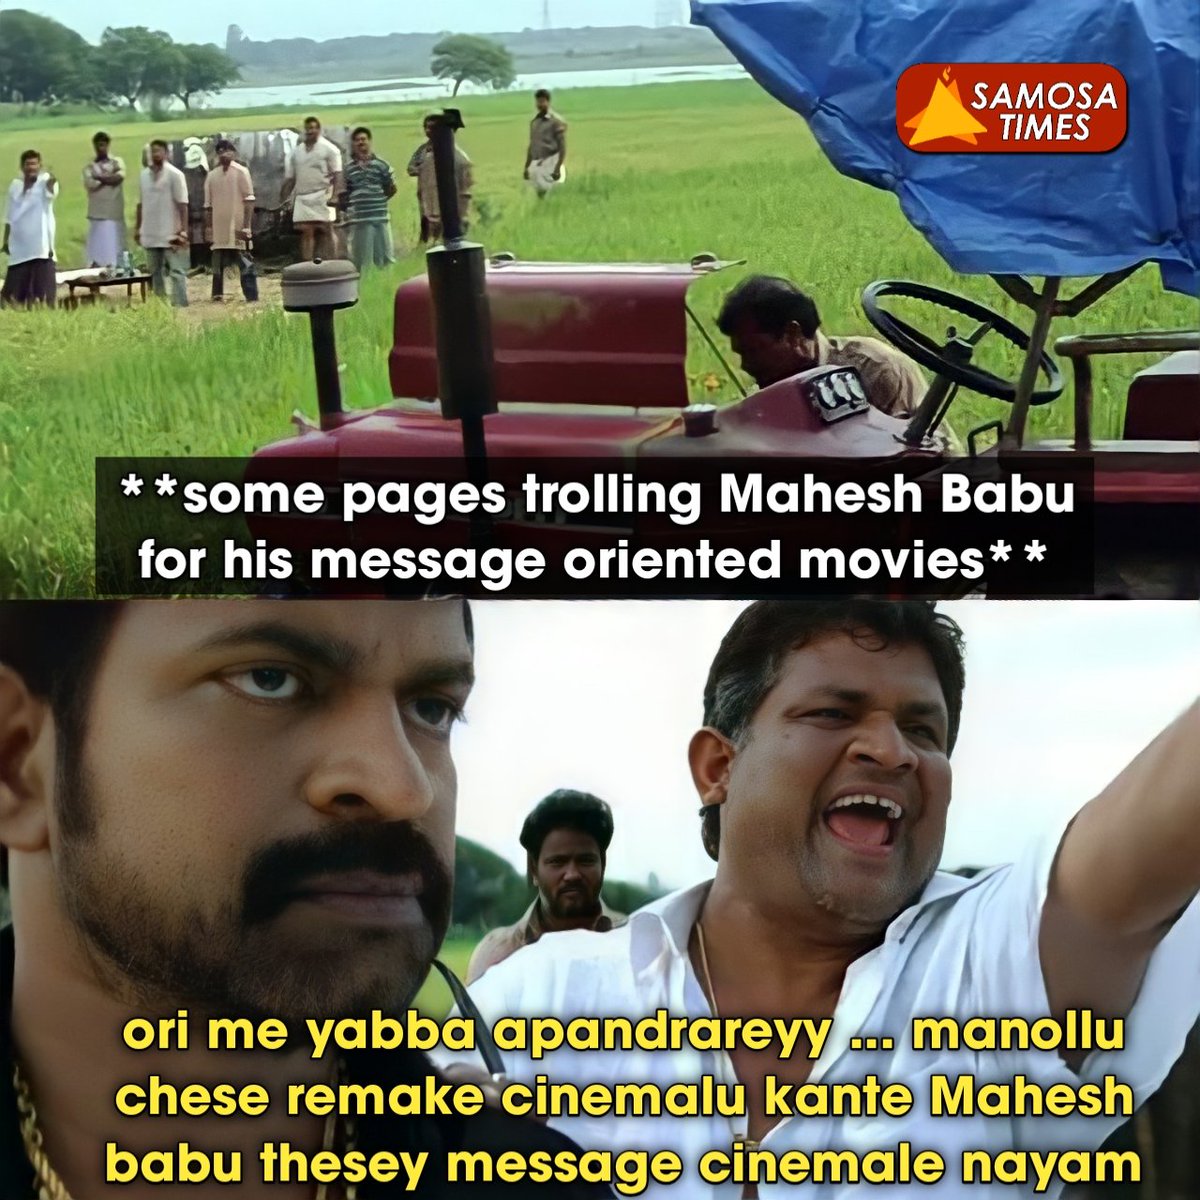 Asalu cinema release avvakamunde message movie antu direct ga troll chesthunnru 🤦🏻
#SVPTitleSong 
#SarkaruVaariPaata